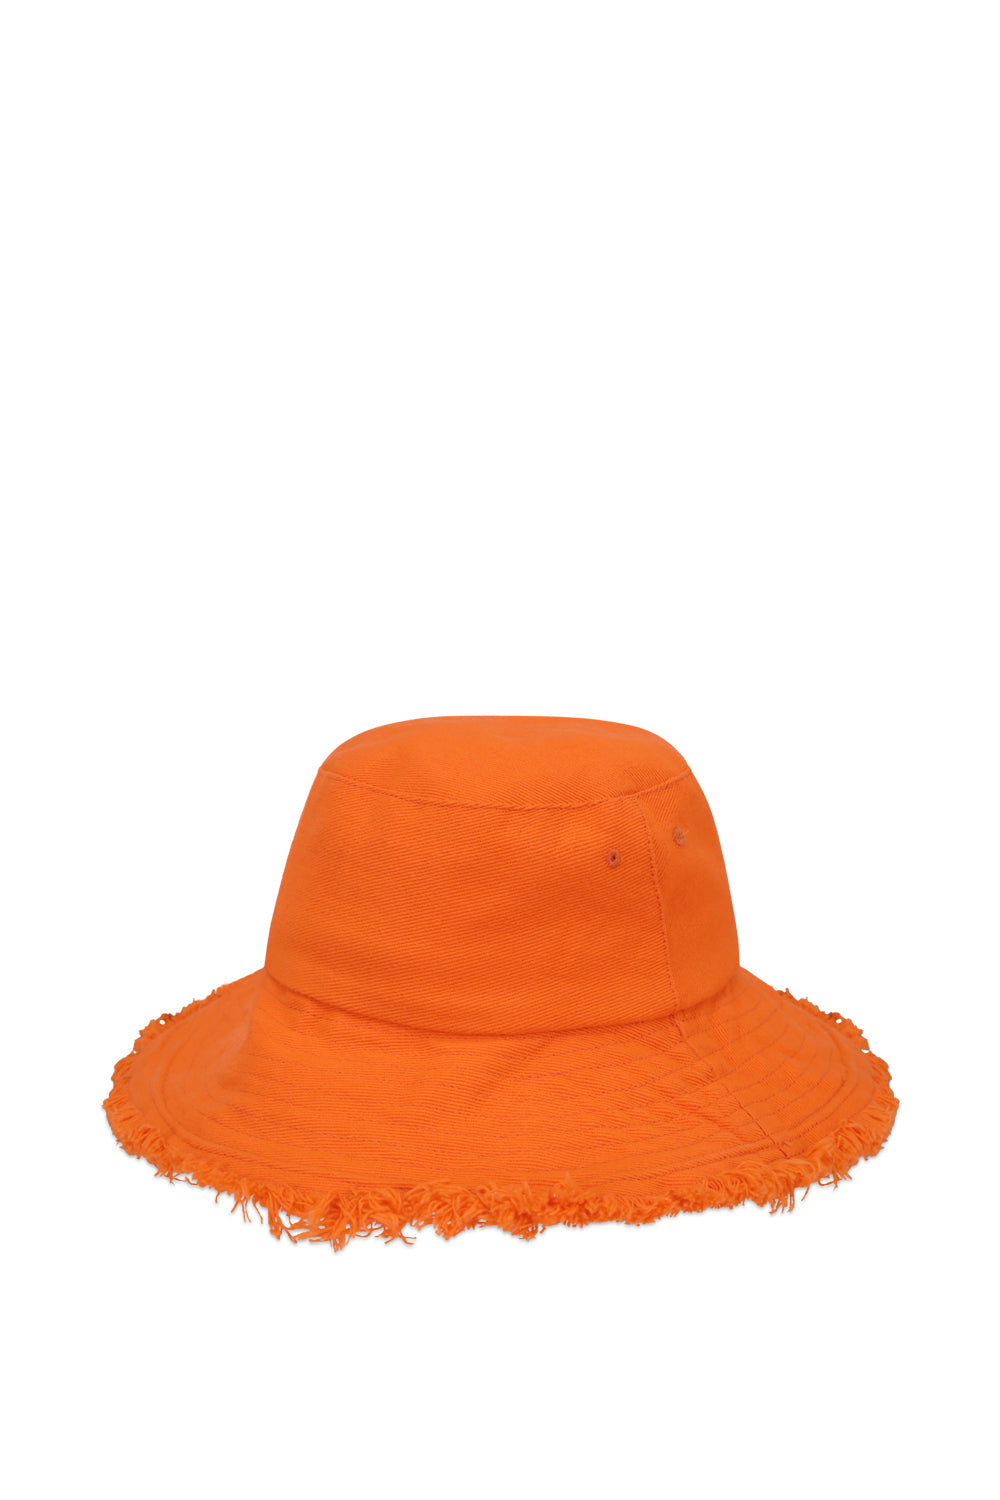 My Accessories London Frayed Edge Bucket Hat in Orange | Beach | Holiday | Summer | Distressed | Frayed | Bright | Hat | Hats | Women's | Women's Accessories |